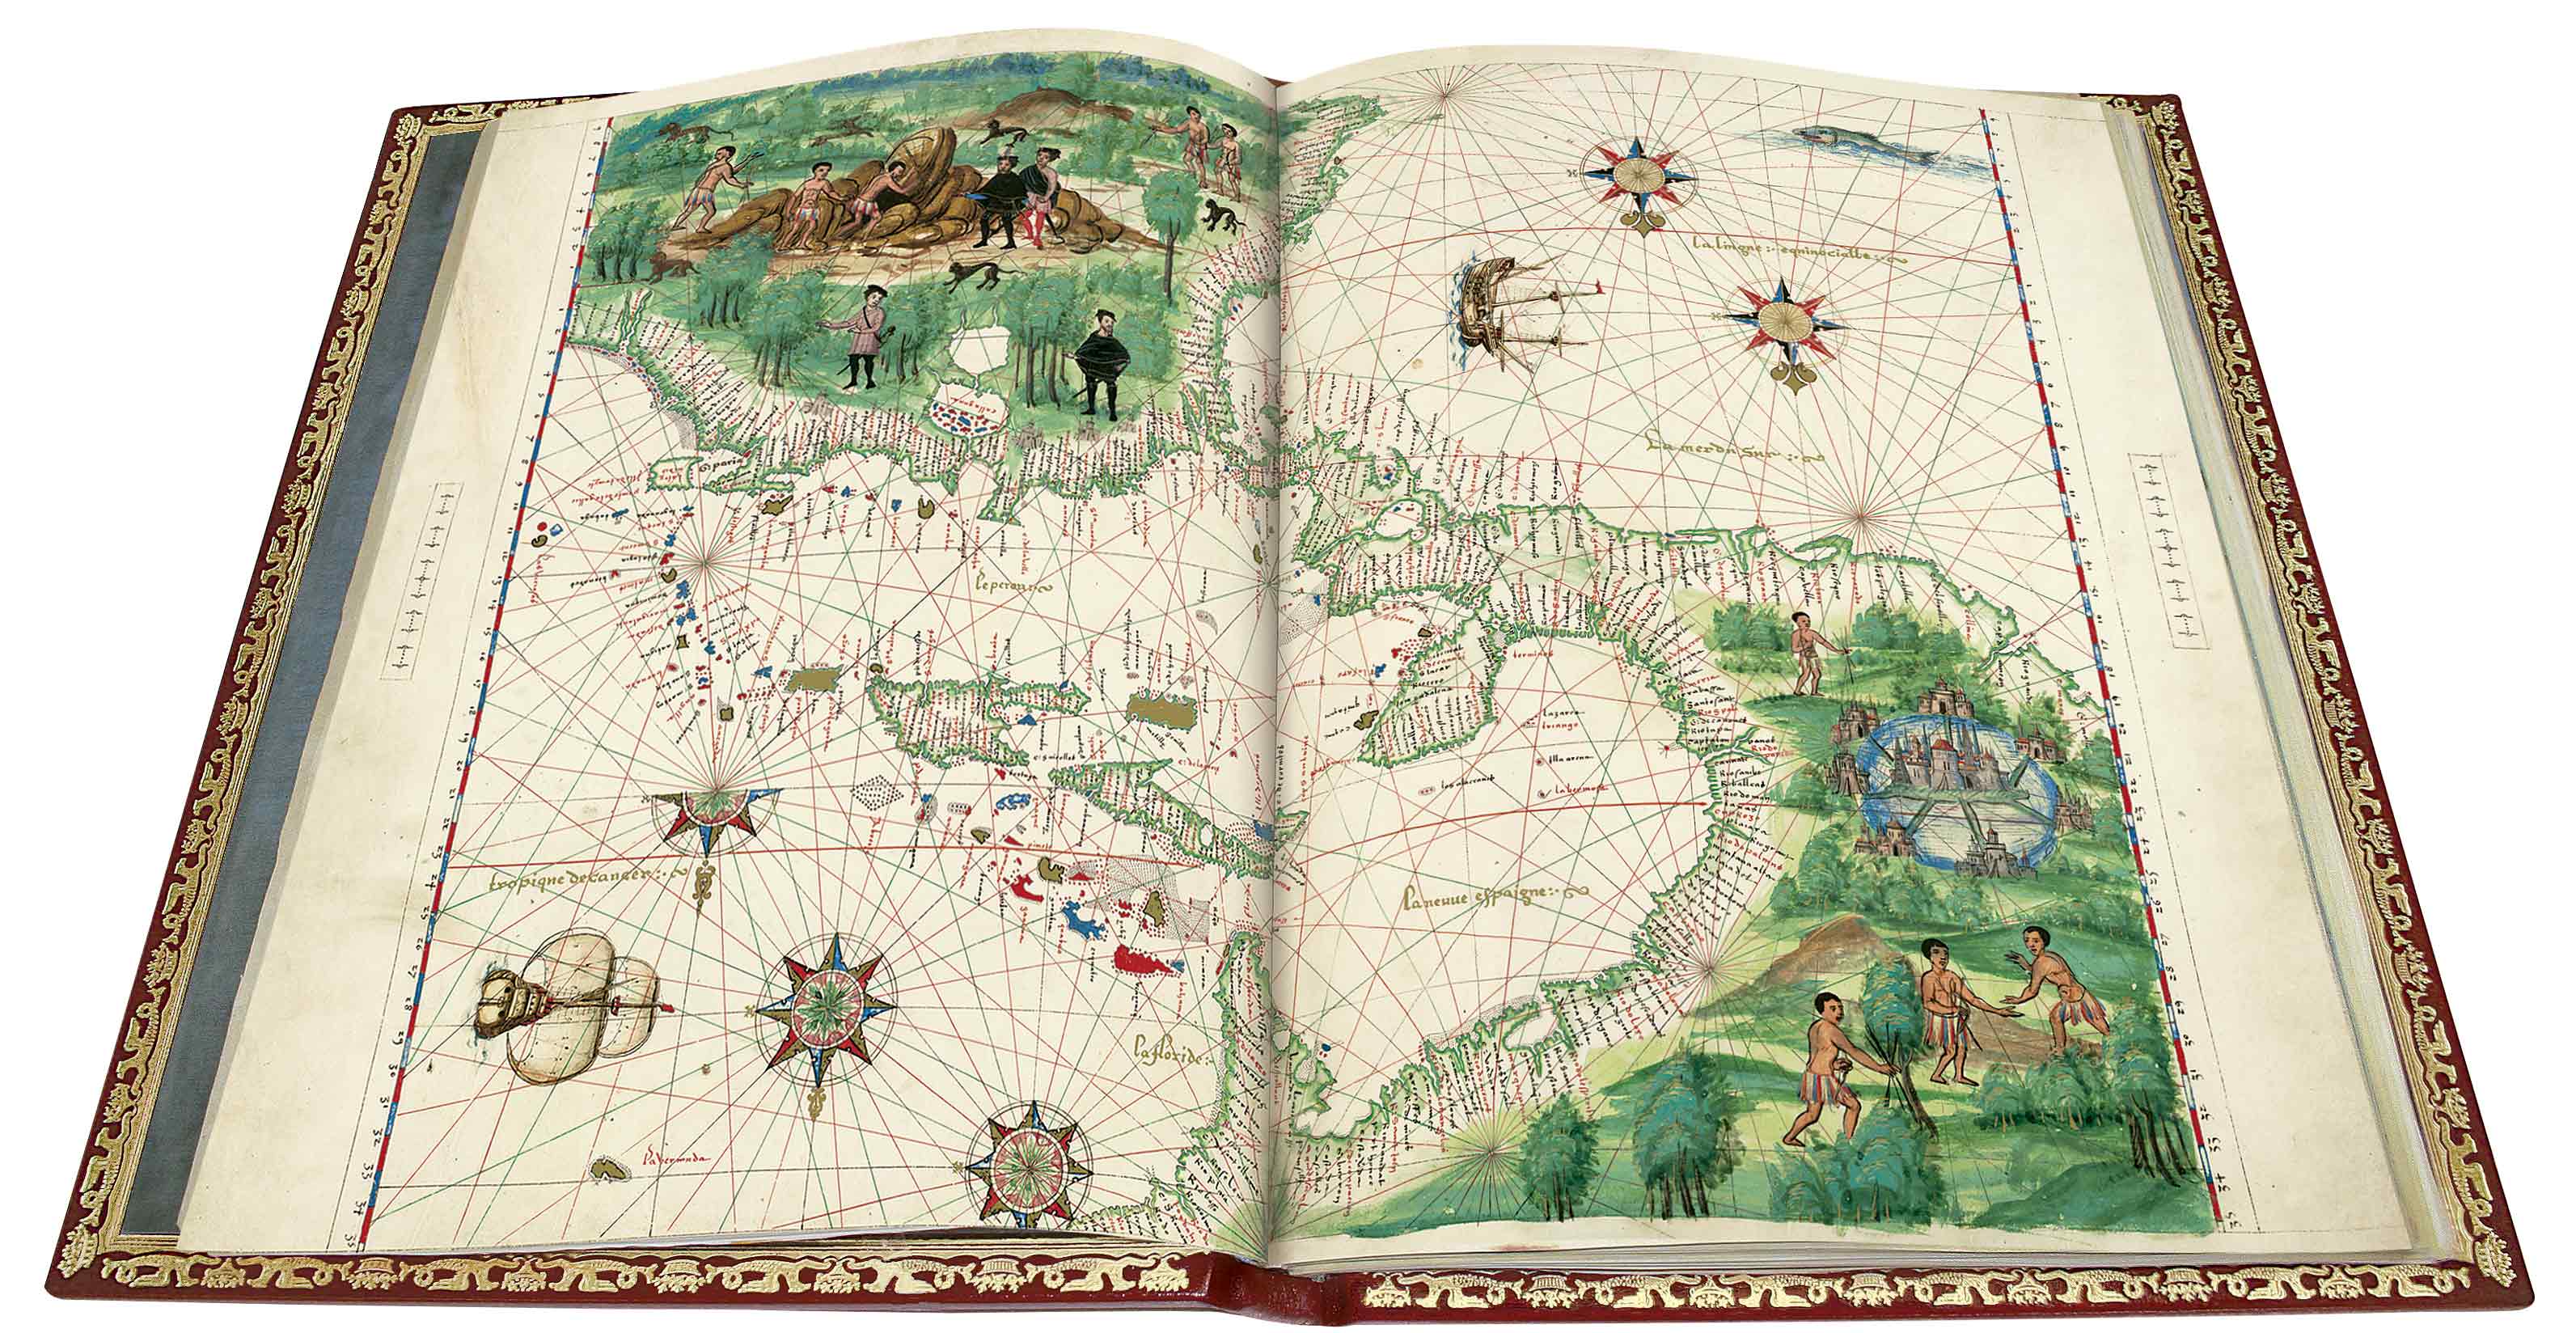 MANUSCRITO ABIERTO. Atlas Vallard, Centroamrica, 1547 (mapa orientado al Sur).